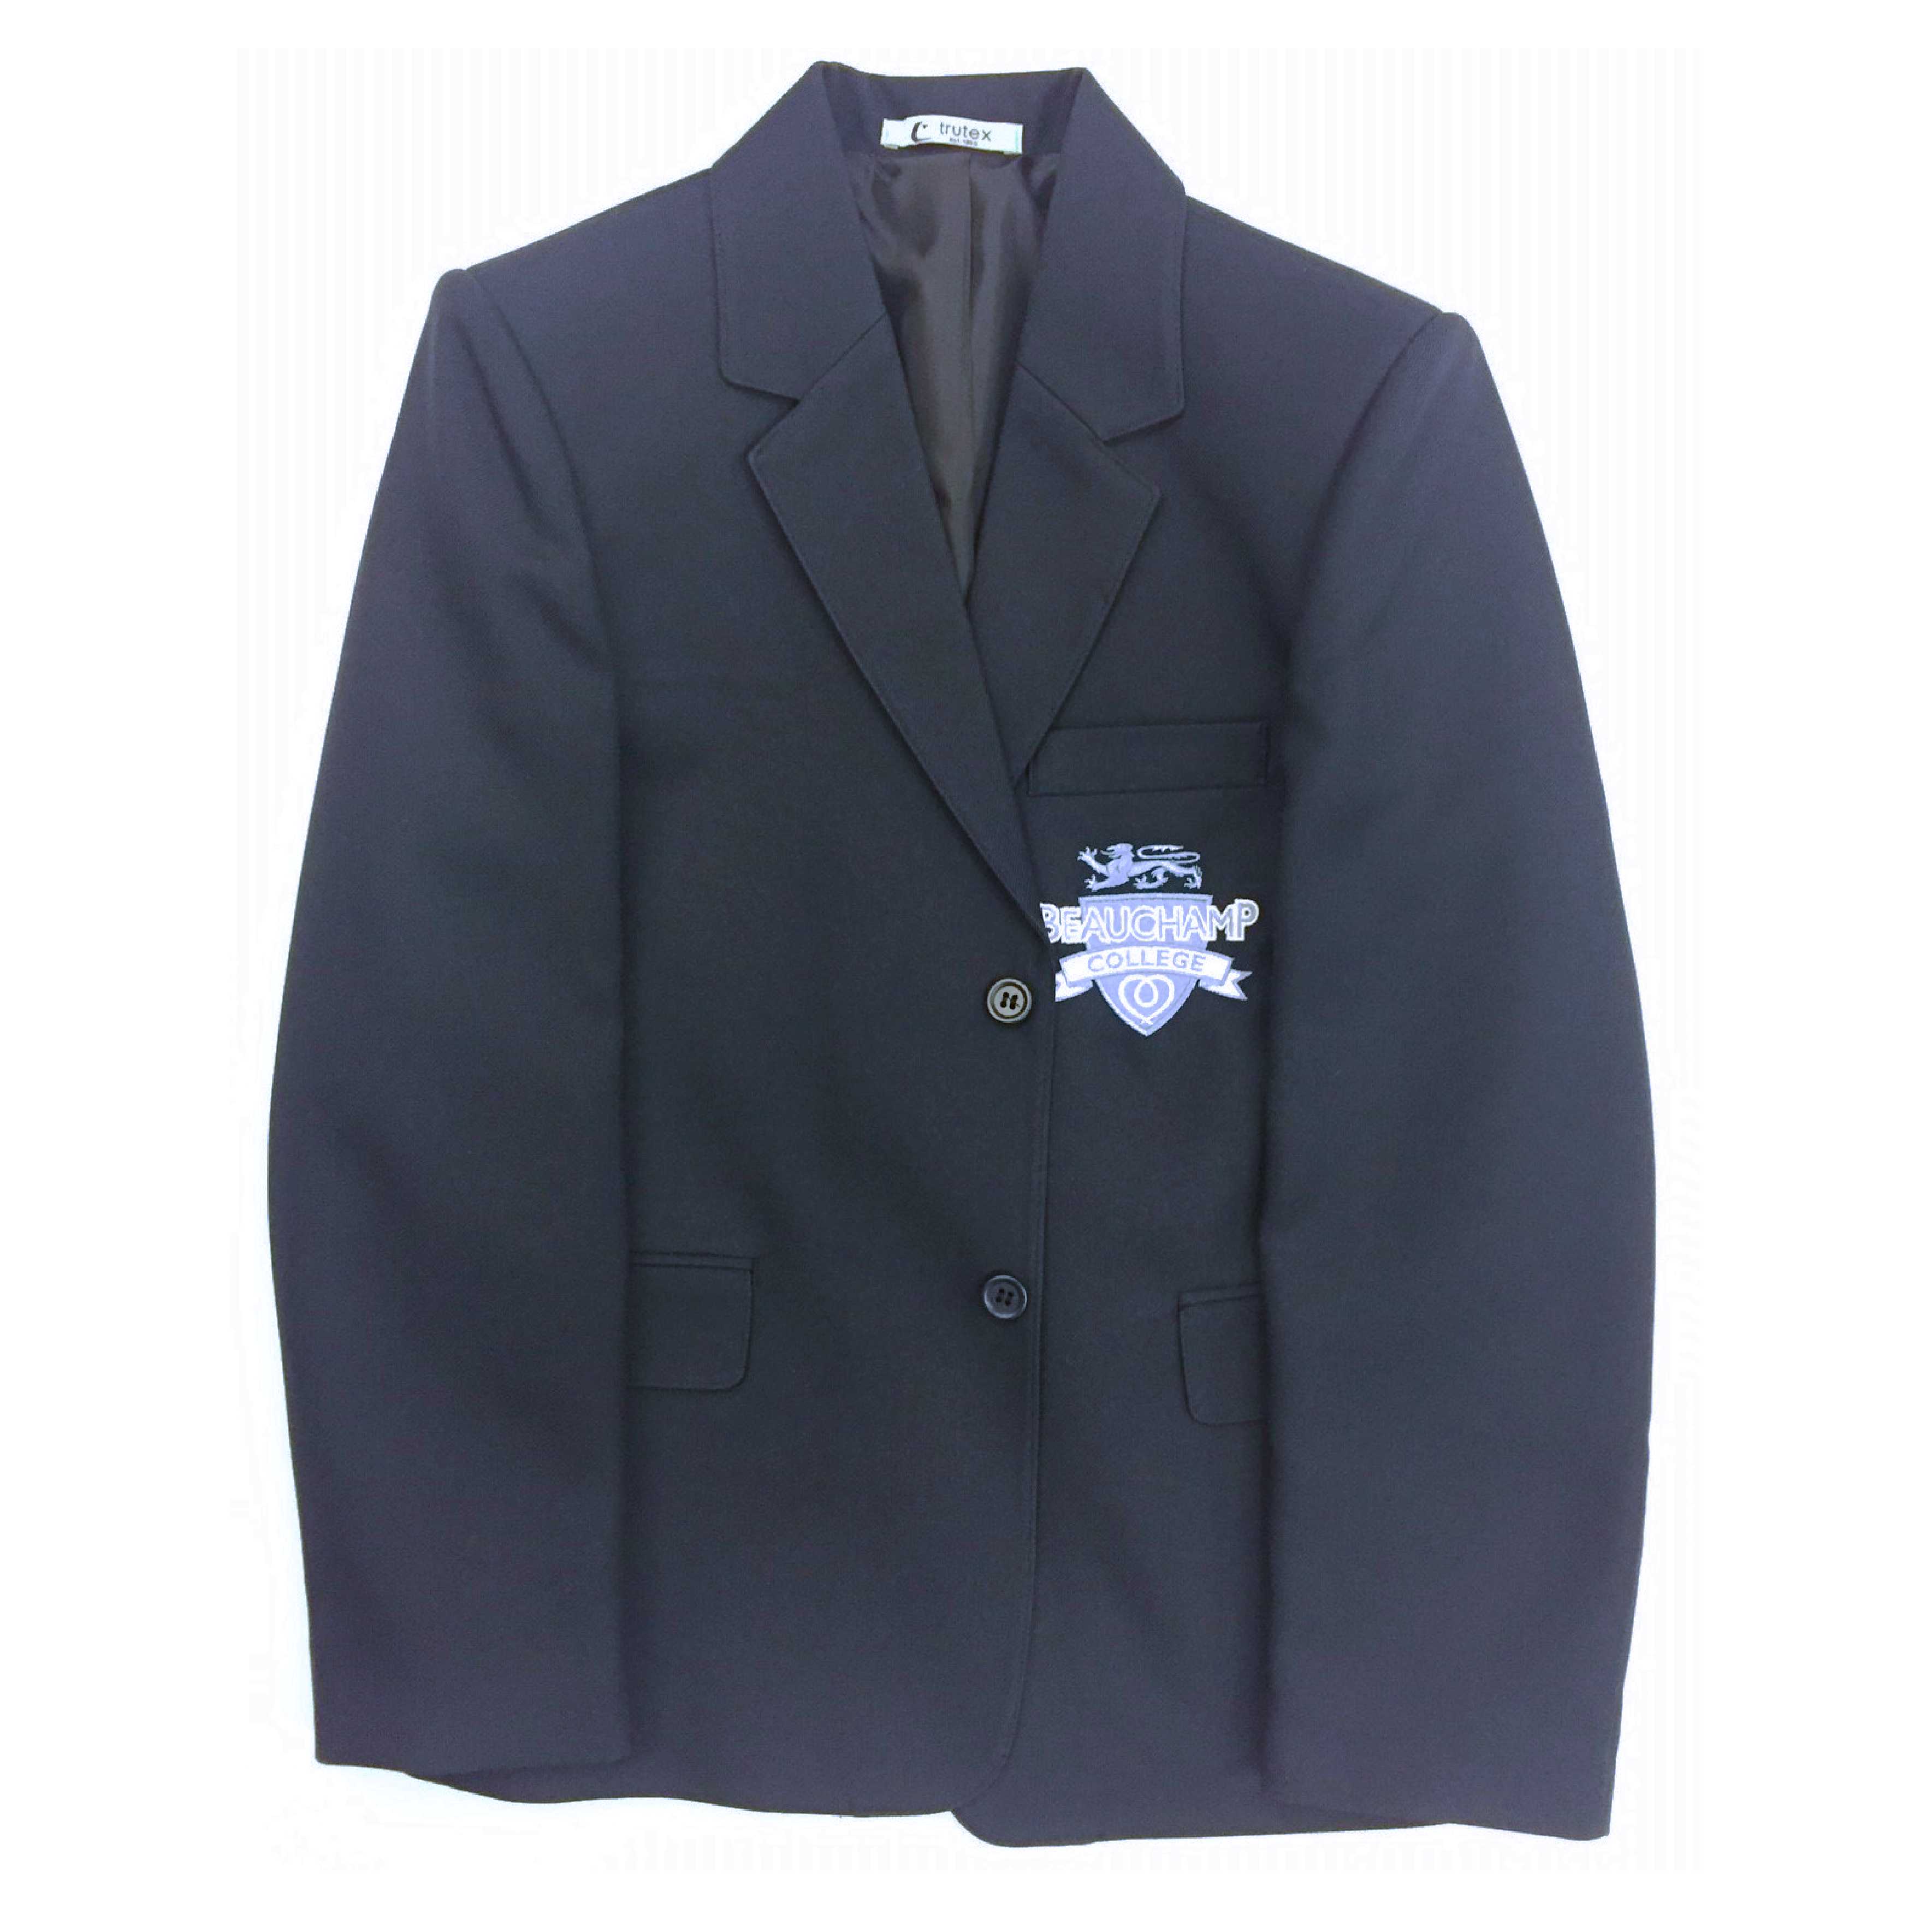 Beauchamp College Boys Navy Blazer w/Logo - Schoolwear Solutions